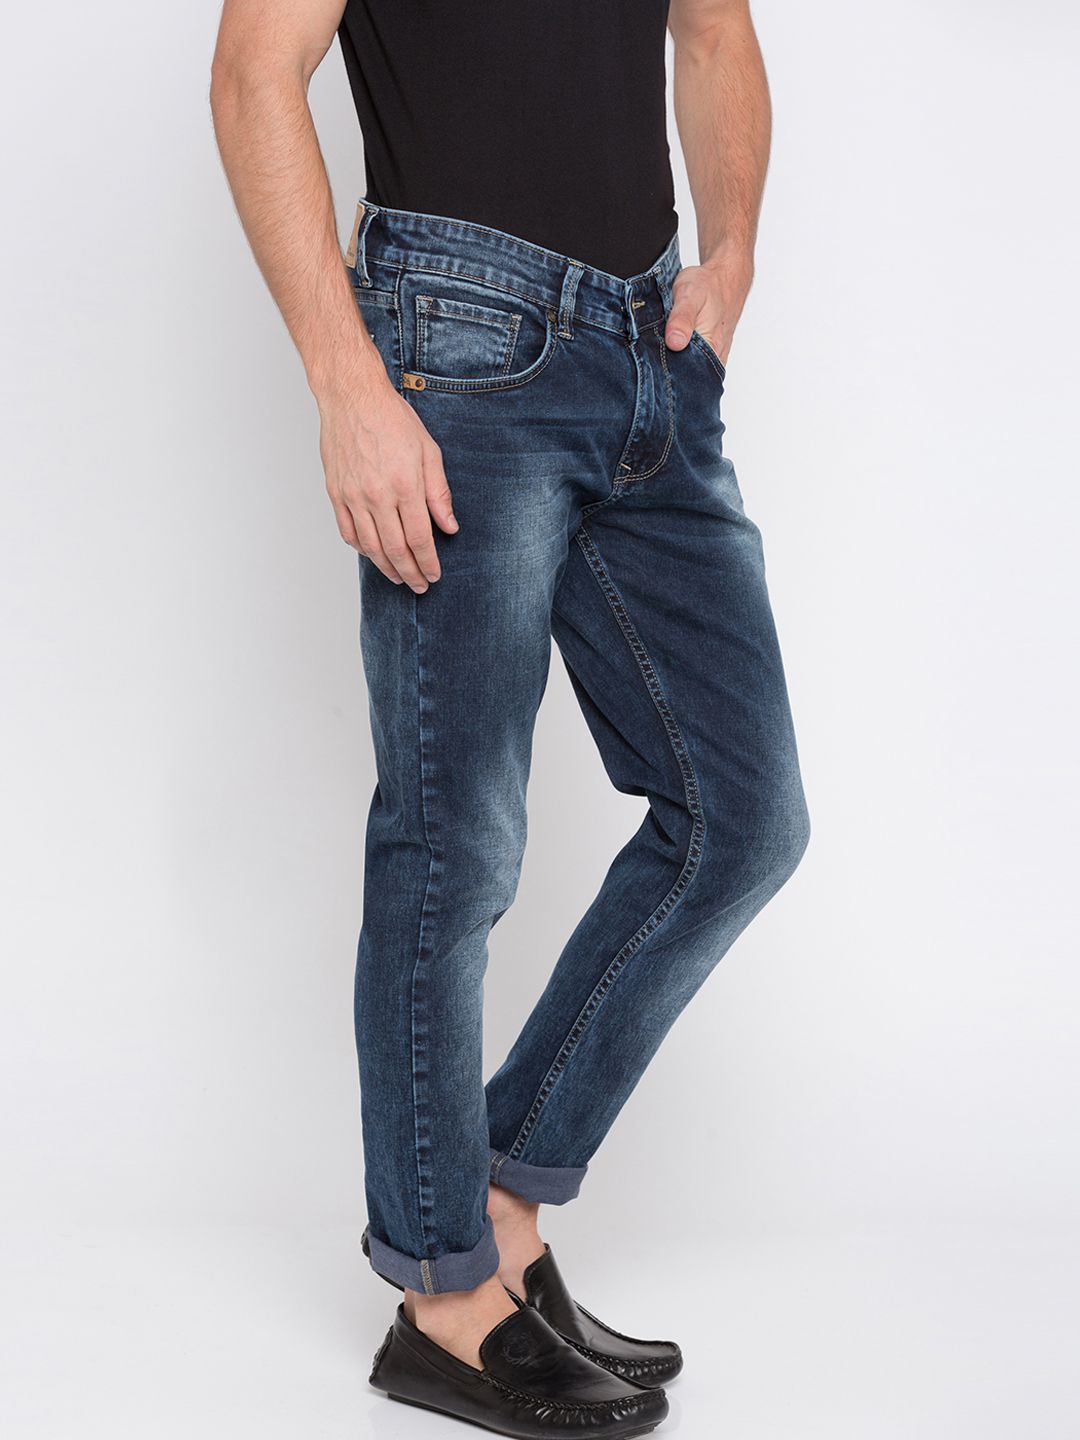 Spykar Dark Blue Skinny Jeans - Buy Spykar Dark Blue Skinny Jeans Online at Best Prices in India 